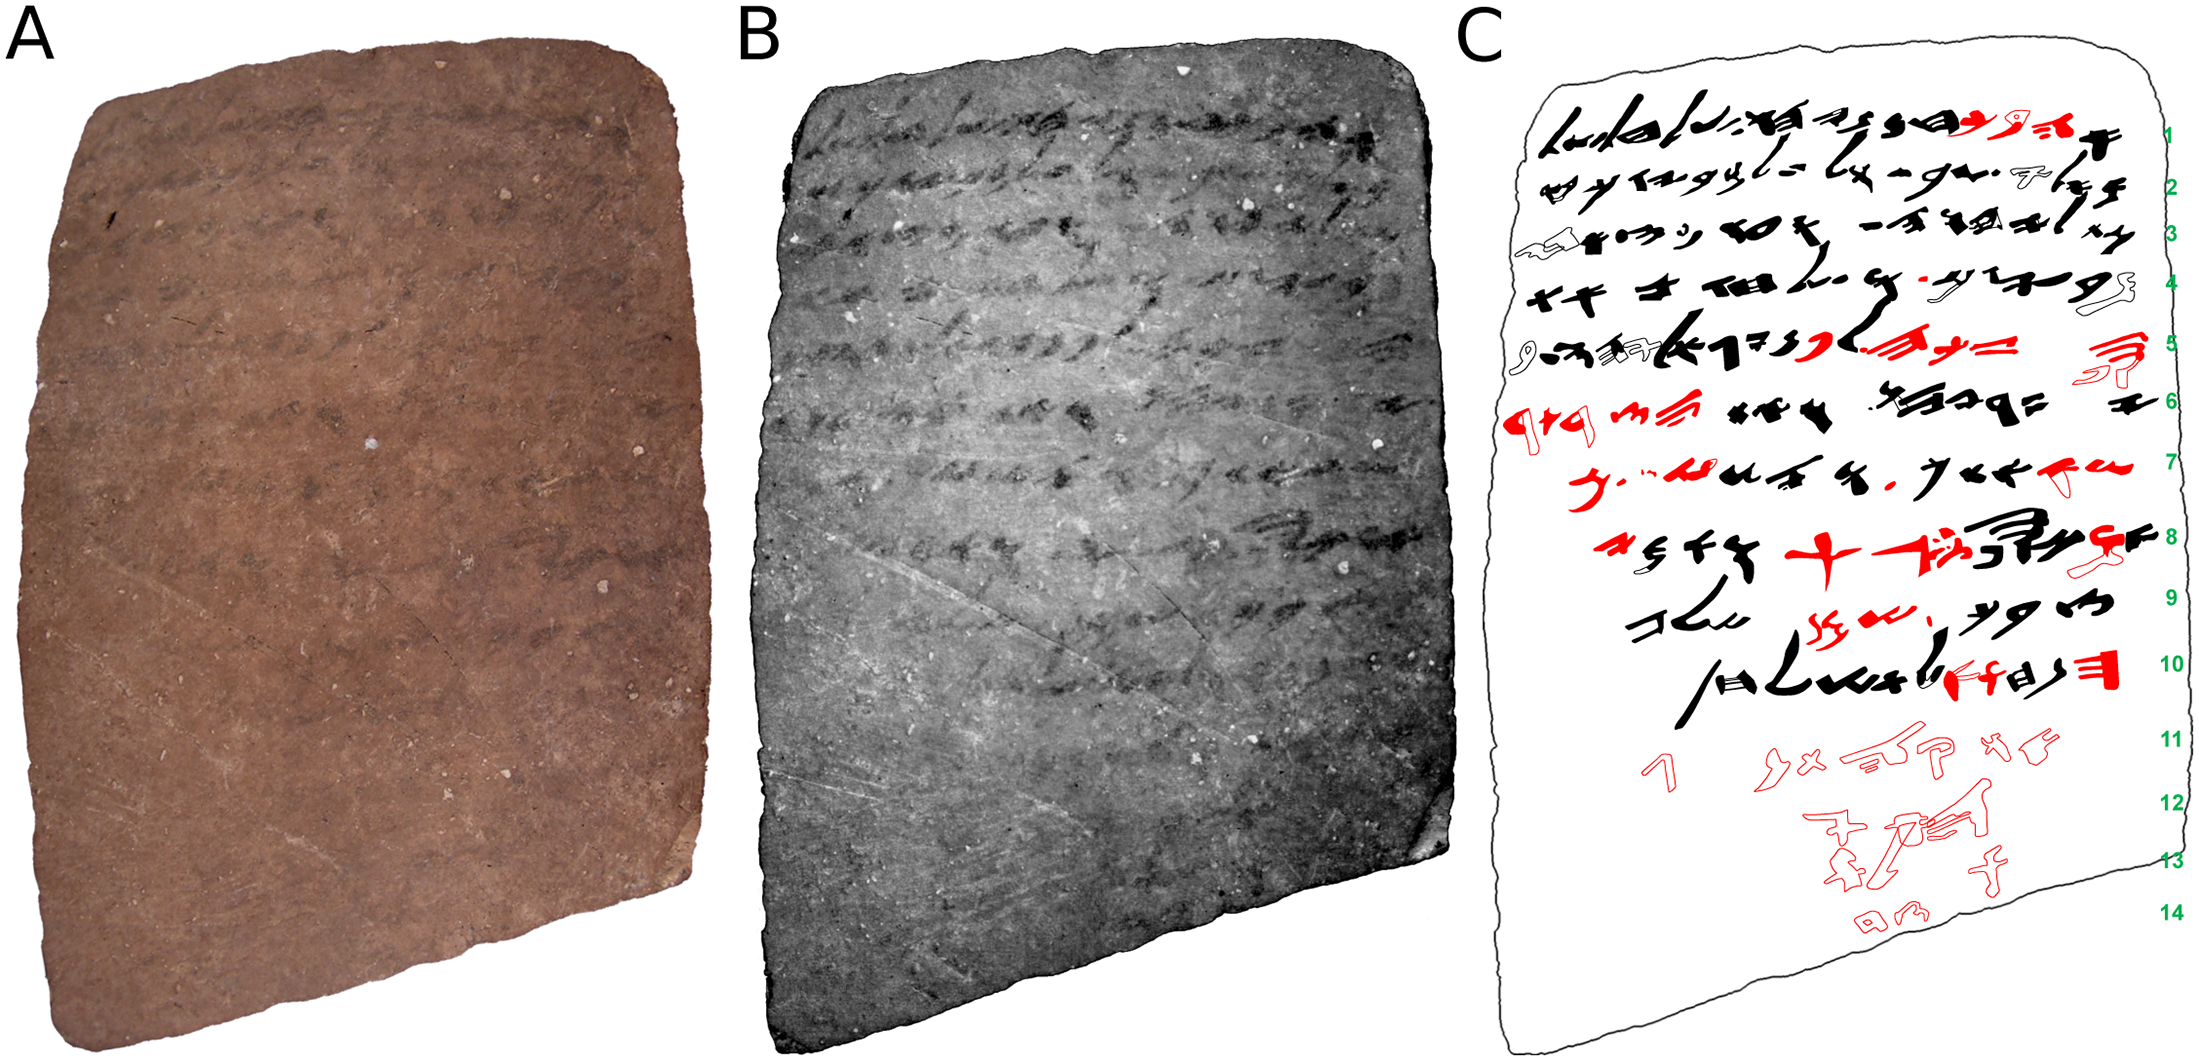 Archaeologists Uncover Secret Message On Bible-Era Pottery